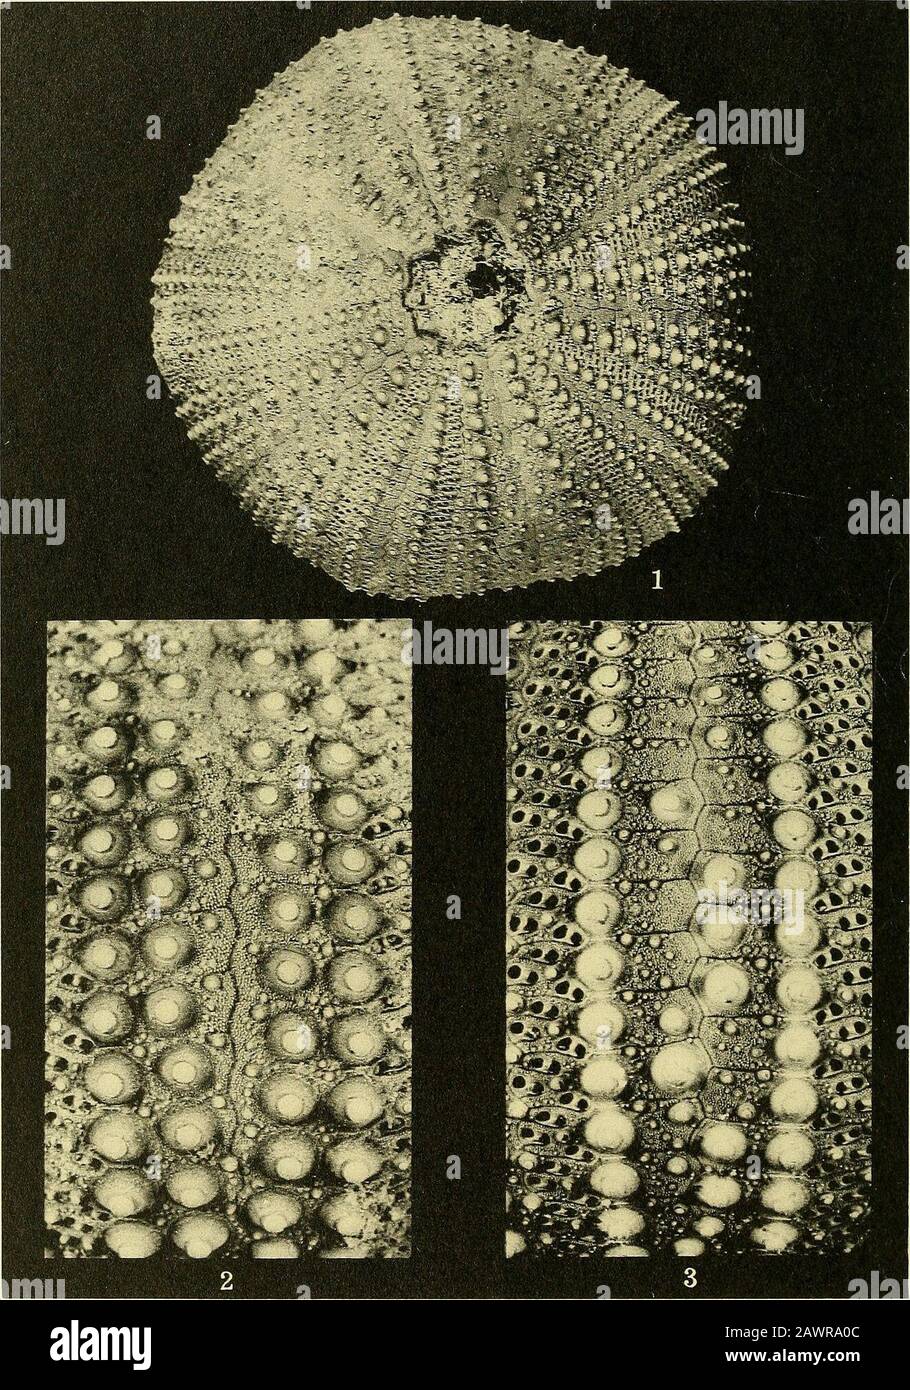 Smithsonian miscellaneous collections . 1-5, Arbacia crenulata Kier, New Species; 6, Arbacia improcera (Conrad) (see explanation of plates at end of text.) SMITHSONIAN MISCELLANEOUS COLLECTIONS VOL. 145. NO. 5, PLATE 2. 1-2, LYTECHINUS VARIEGATUS PLURITUBERCULATUS KlER, NEW SUBSPECIES;3, LYTECHINUS VARIEGATUS VARIEGATUS (LESKE) (SEE EXPLANATION OF PLATES AT END OF TEXT.) SMITHSONIAN MISCELLANEOUS COLLECTIONS VOL. 145. NO. 5. PLATE 3 Stock Photo